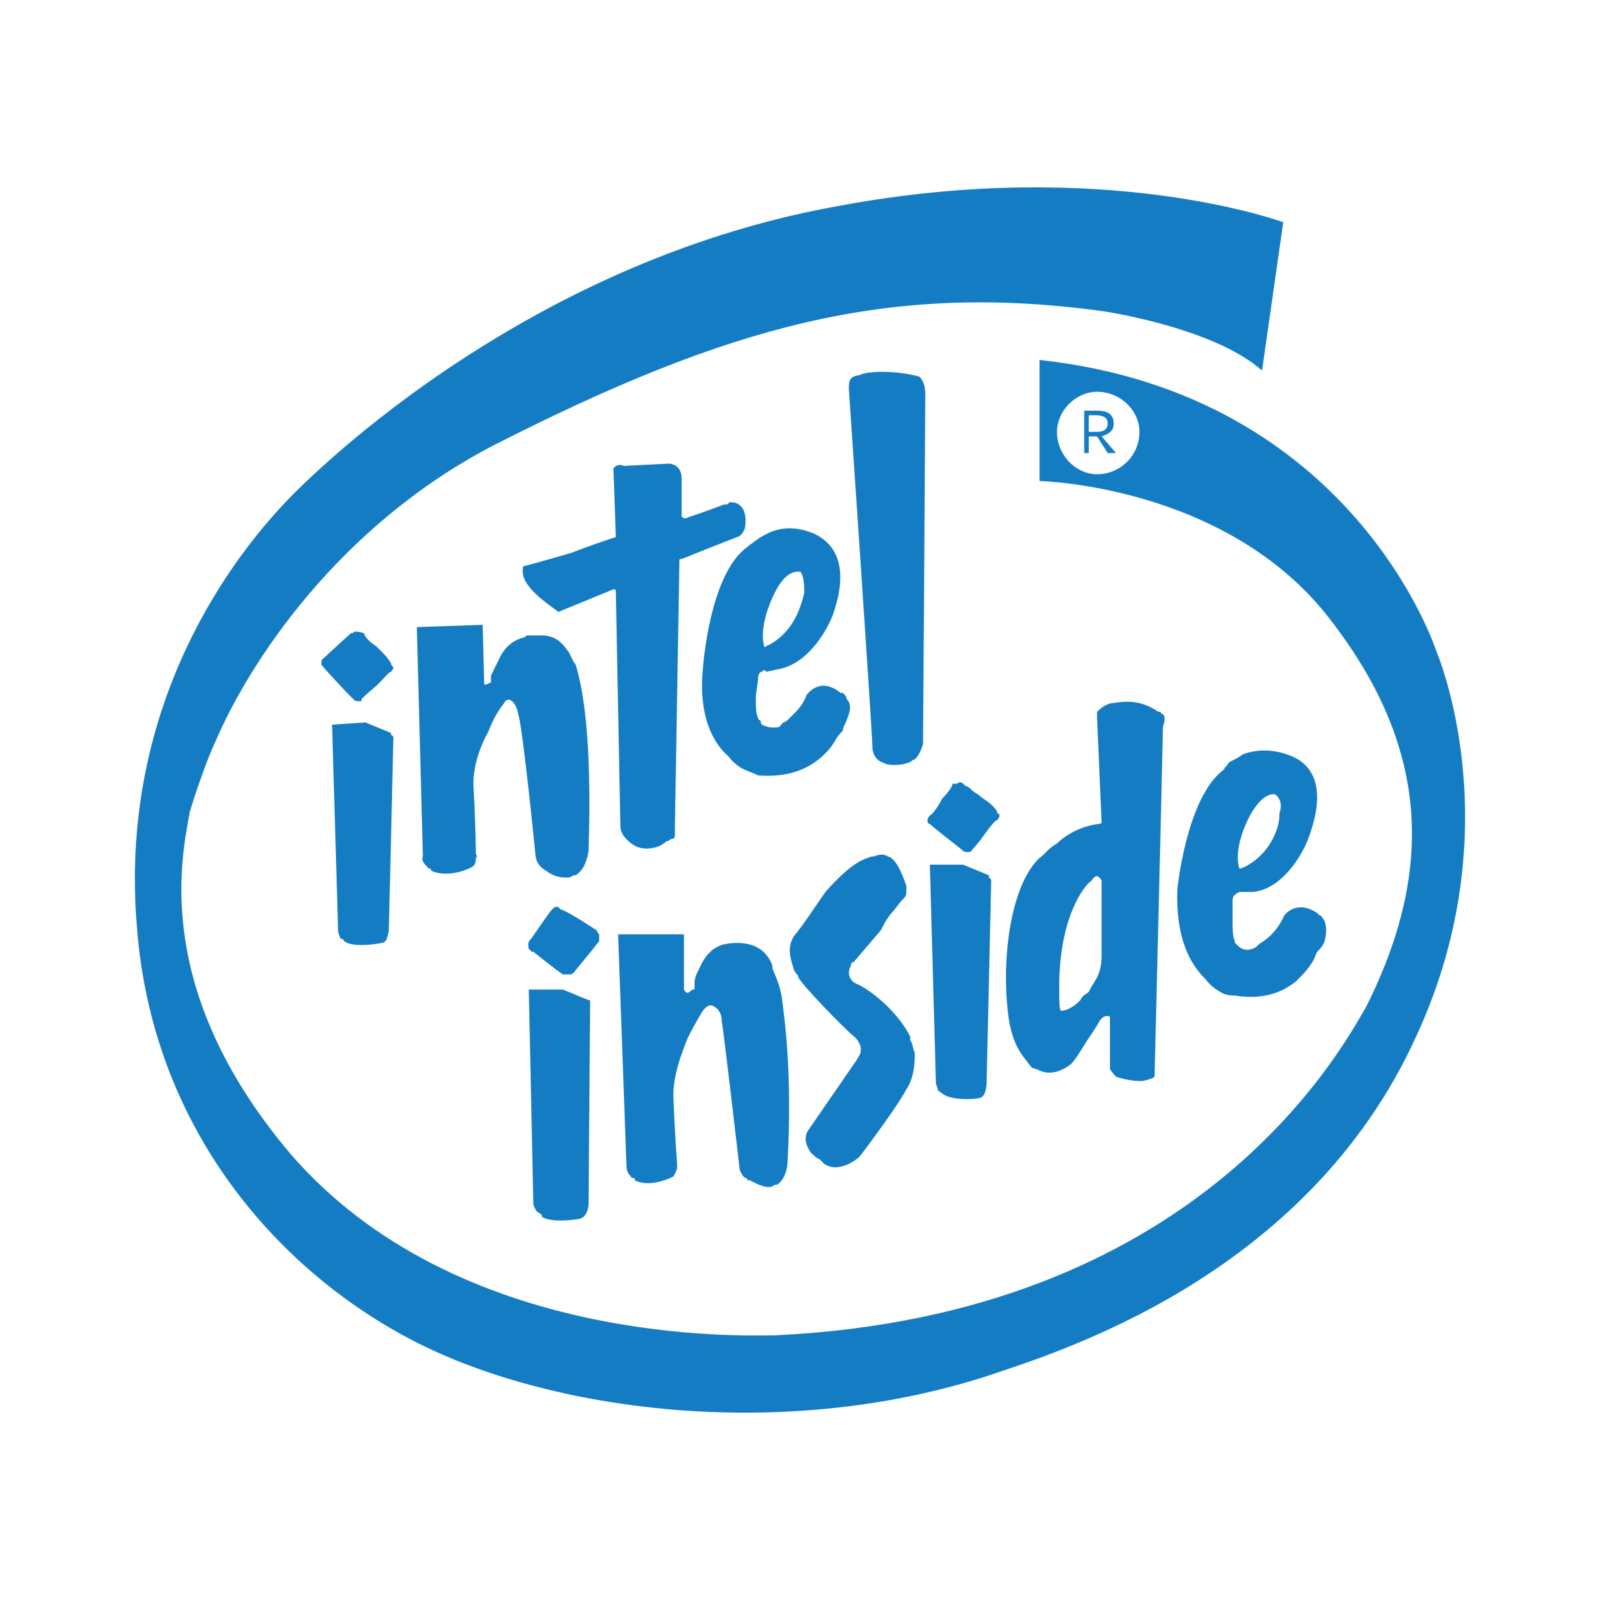 Intel Inside Logo